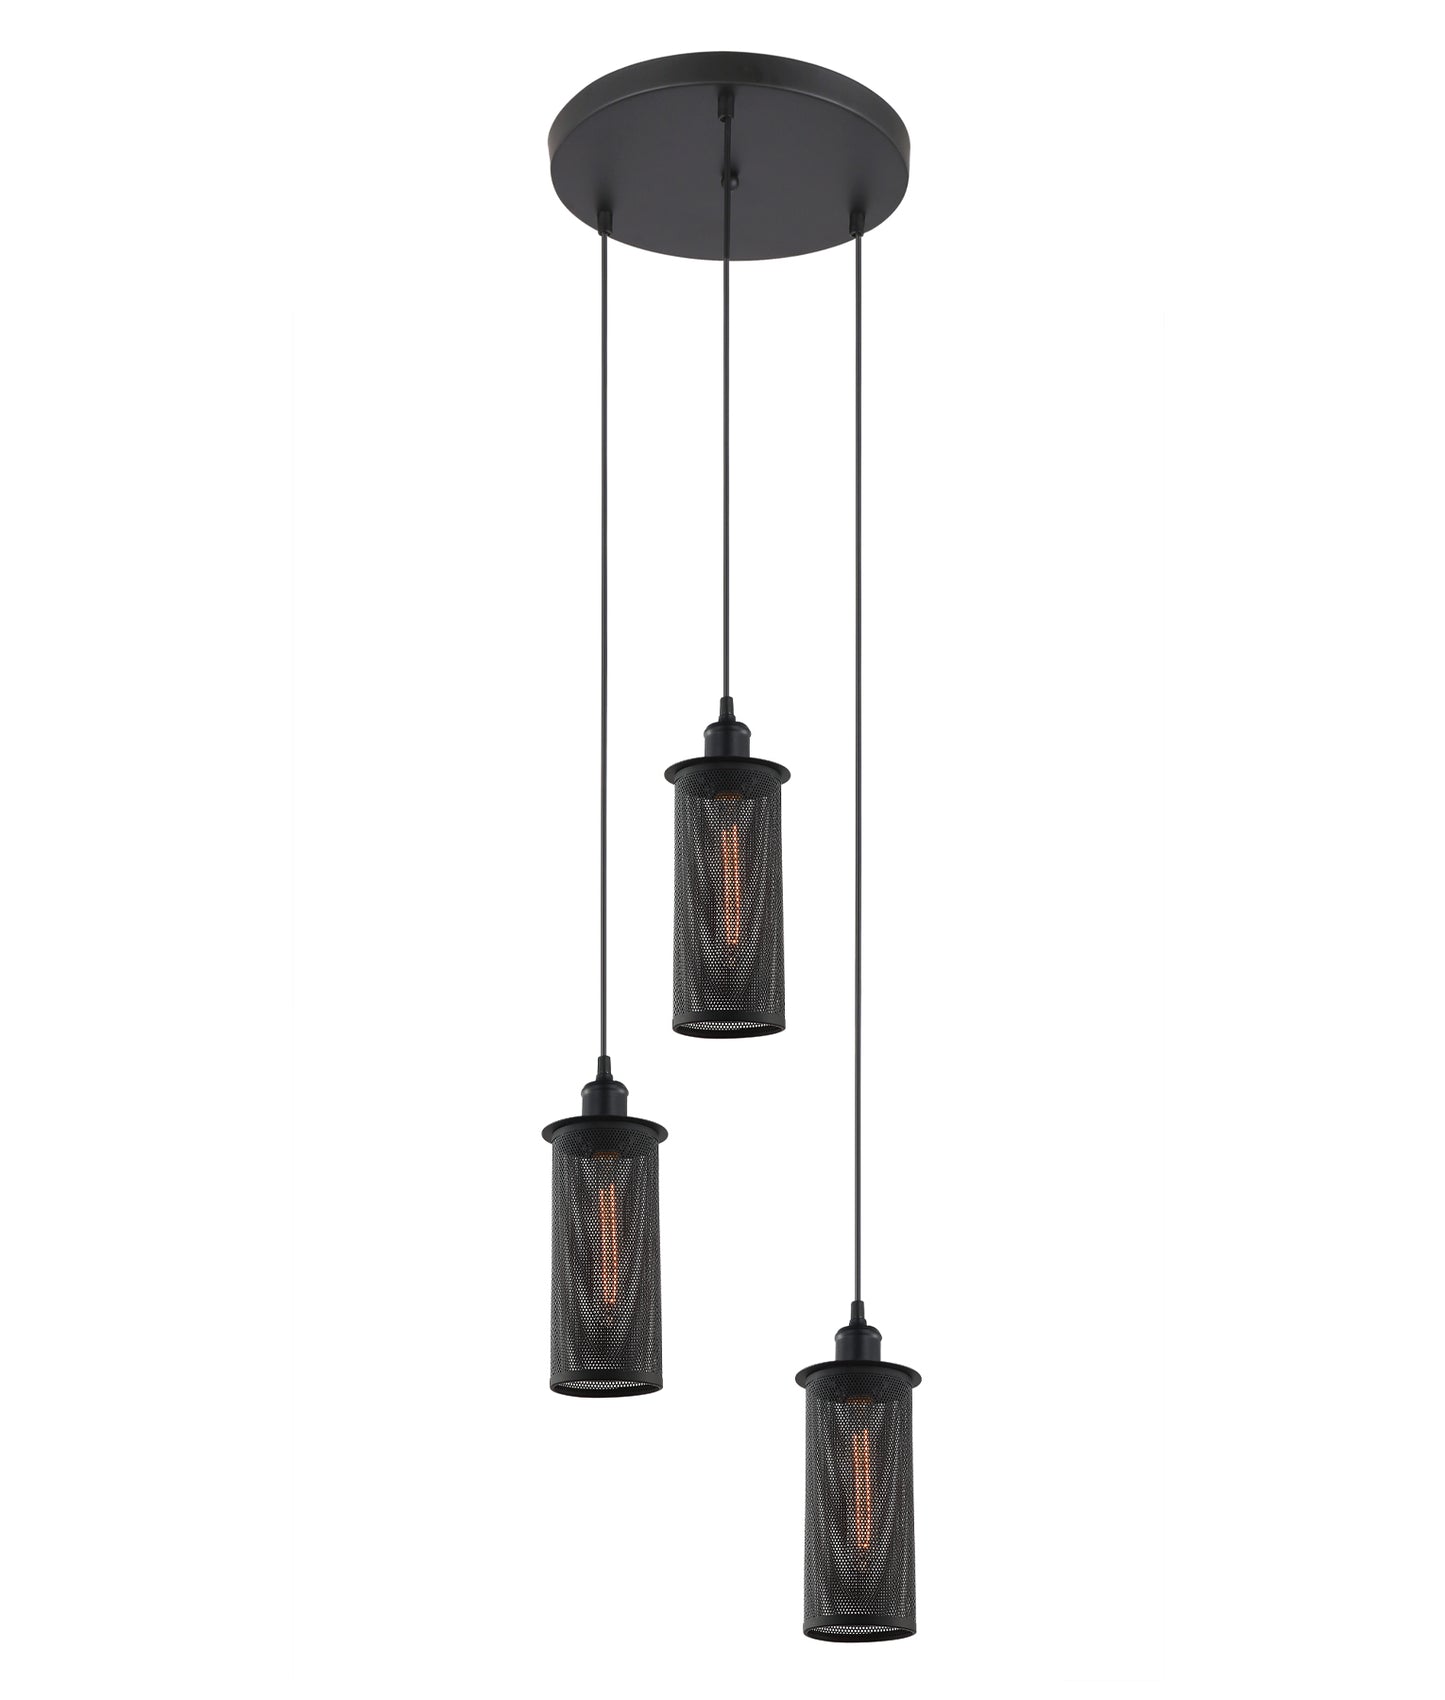 VENETO: Industrial Aged Decorative Multiple Black Mesh Pendant Light